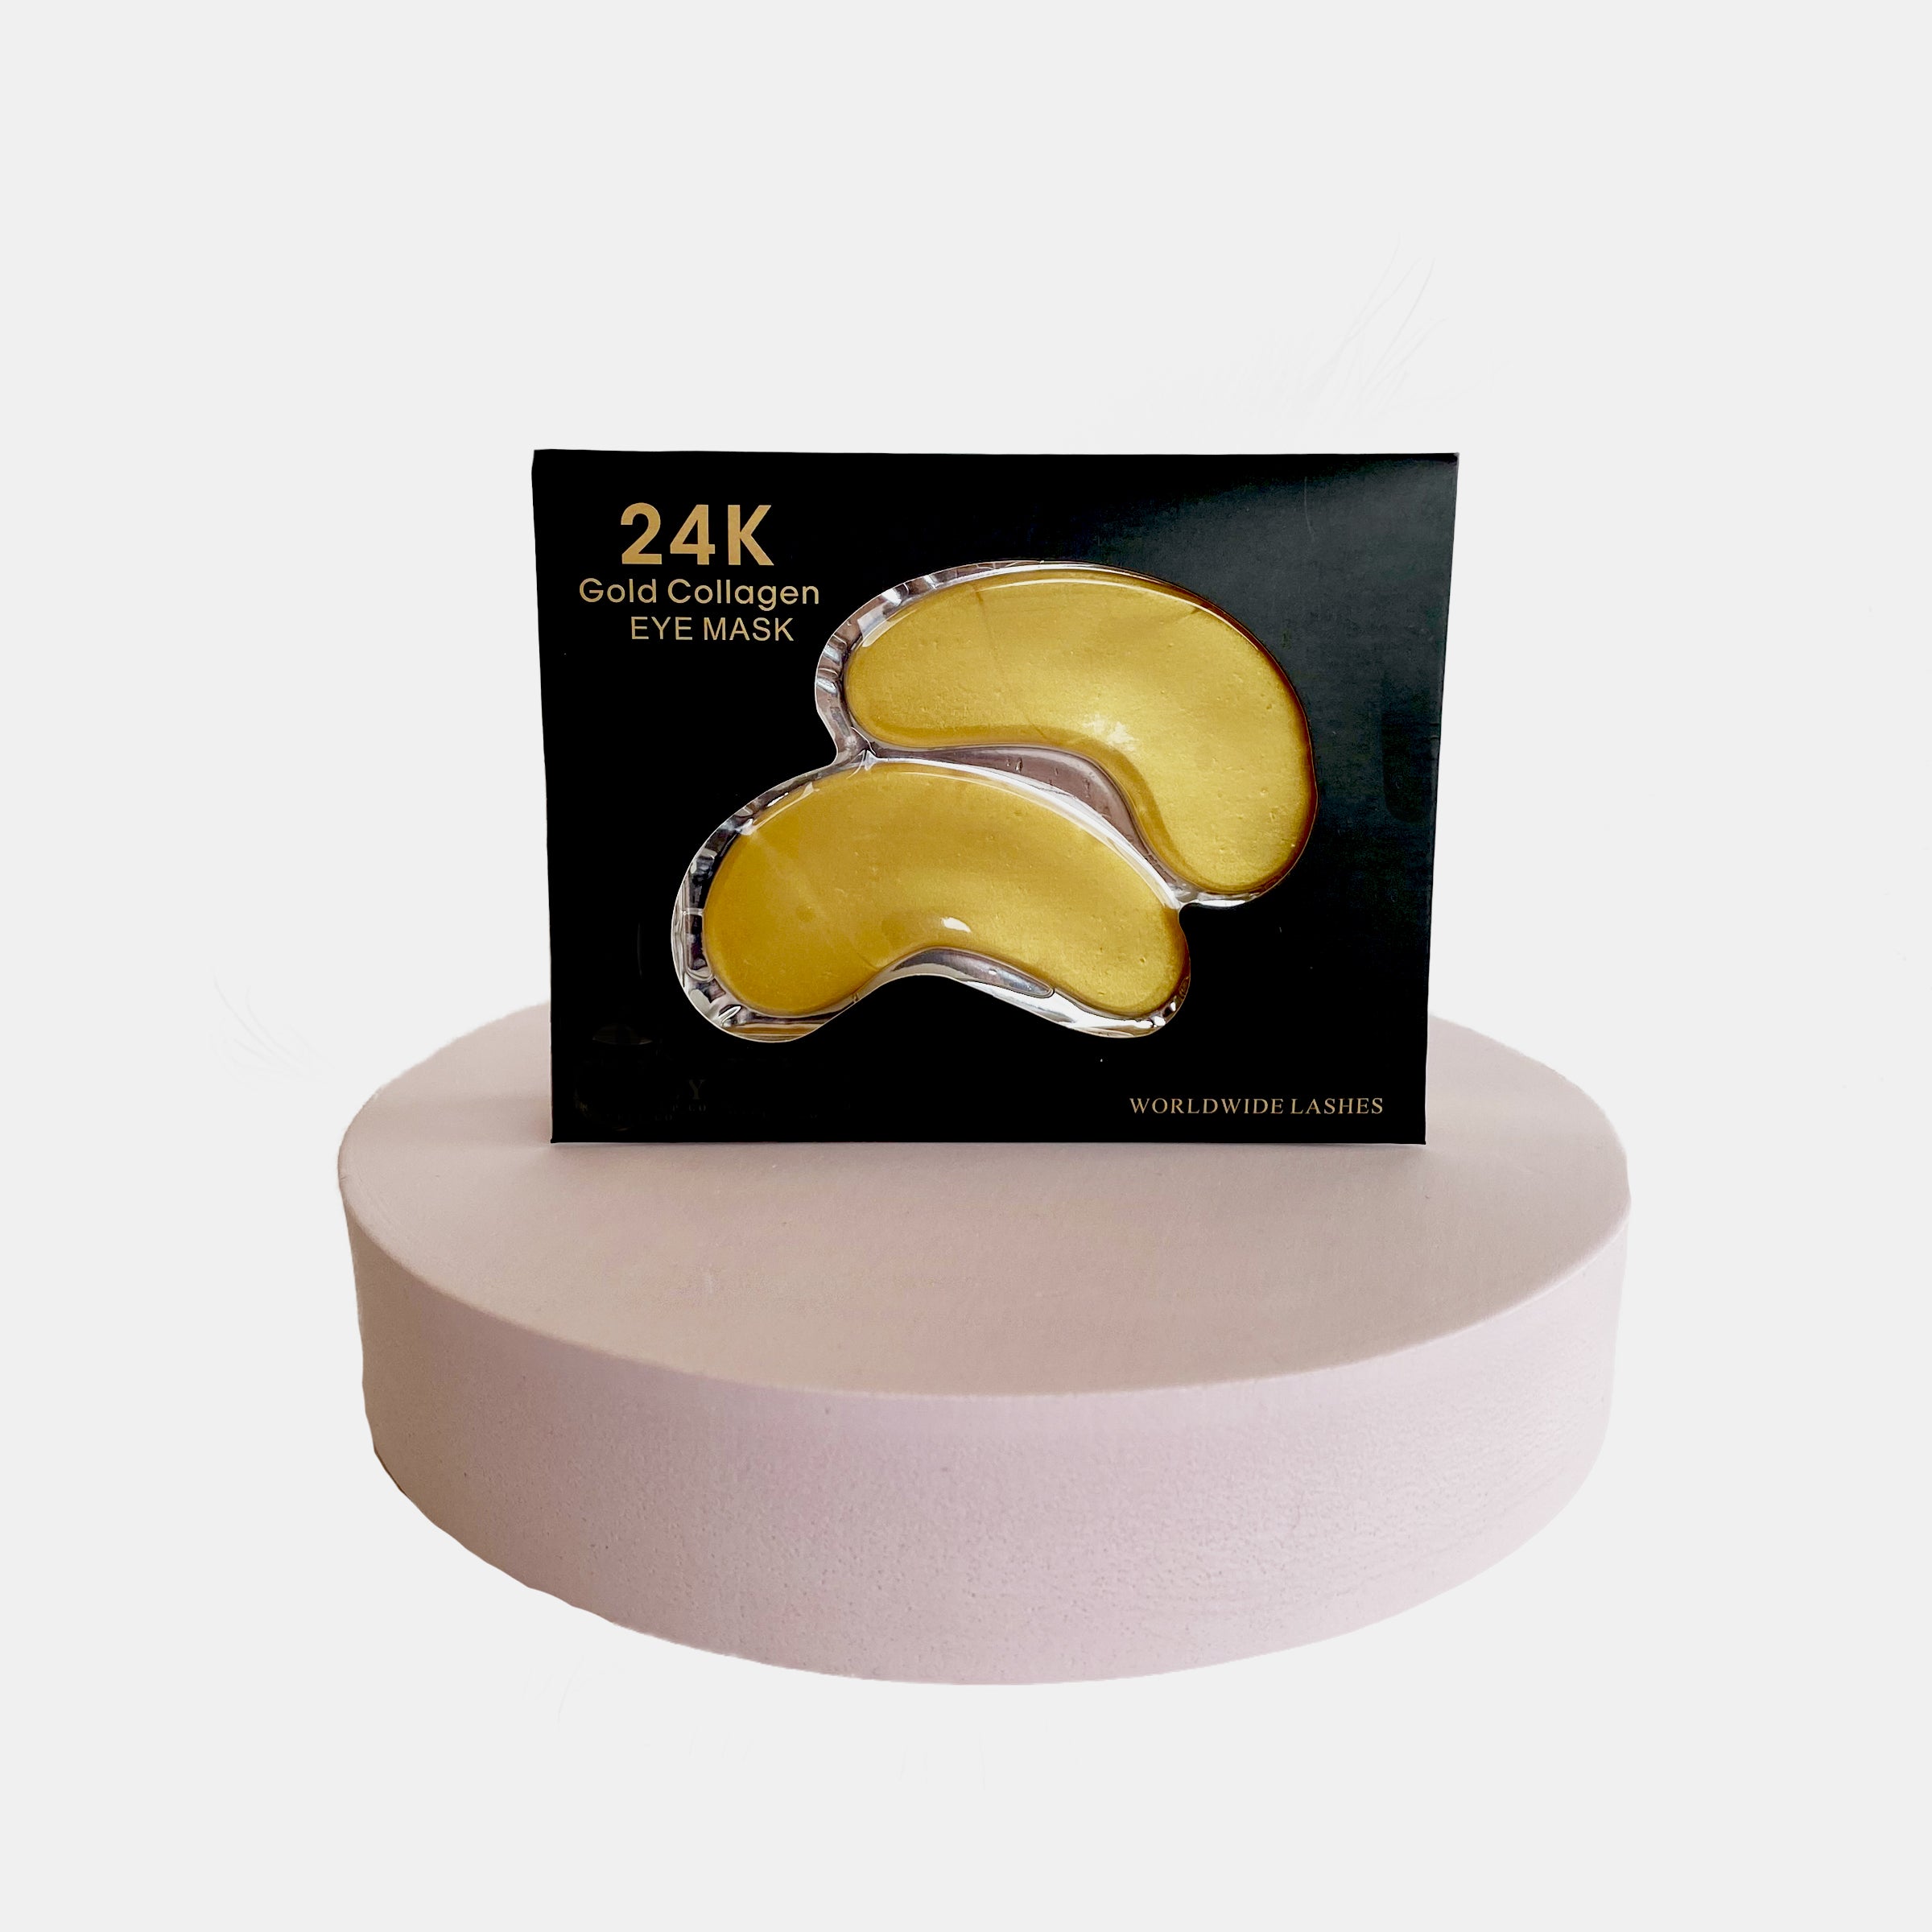 5 PACK x 24K Gold Collagen Eye Mask